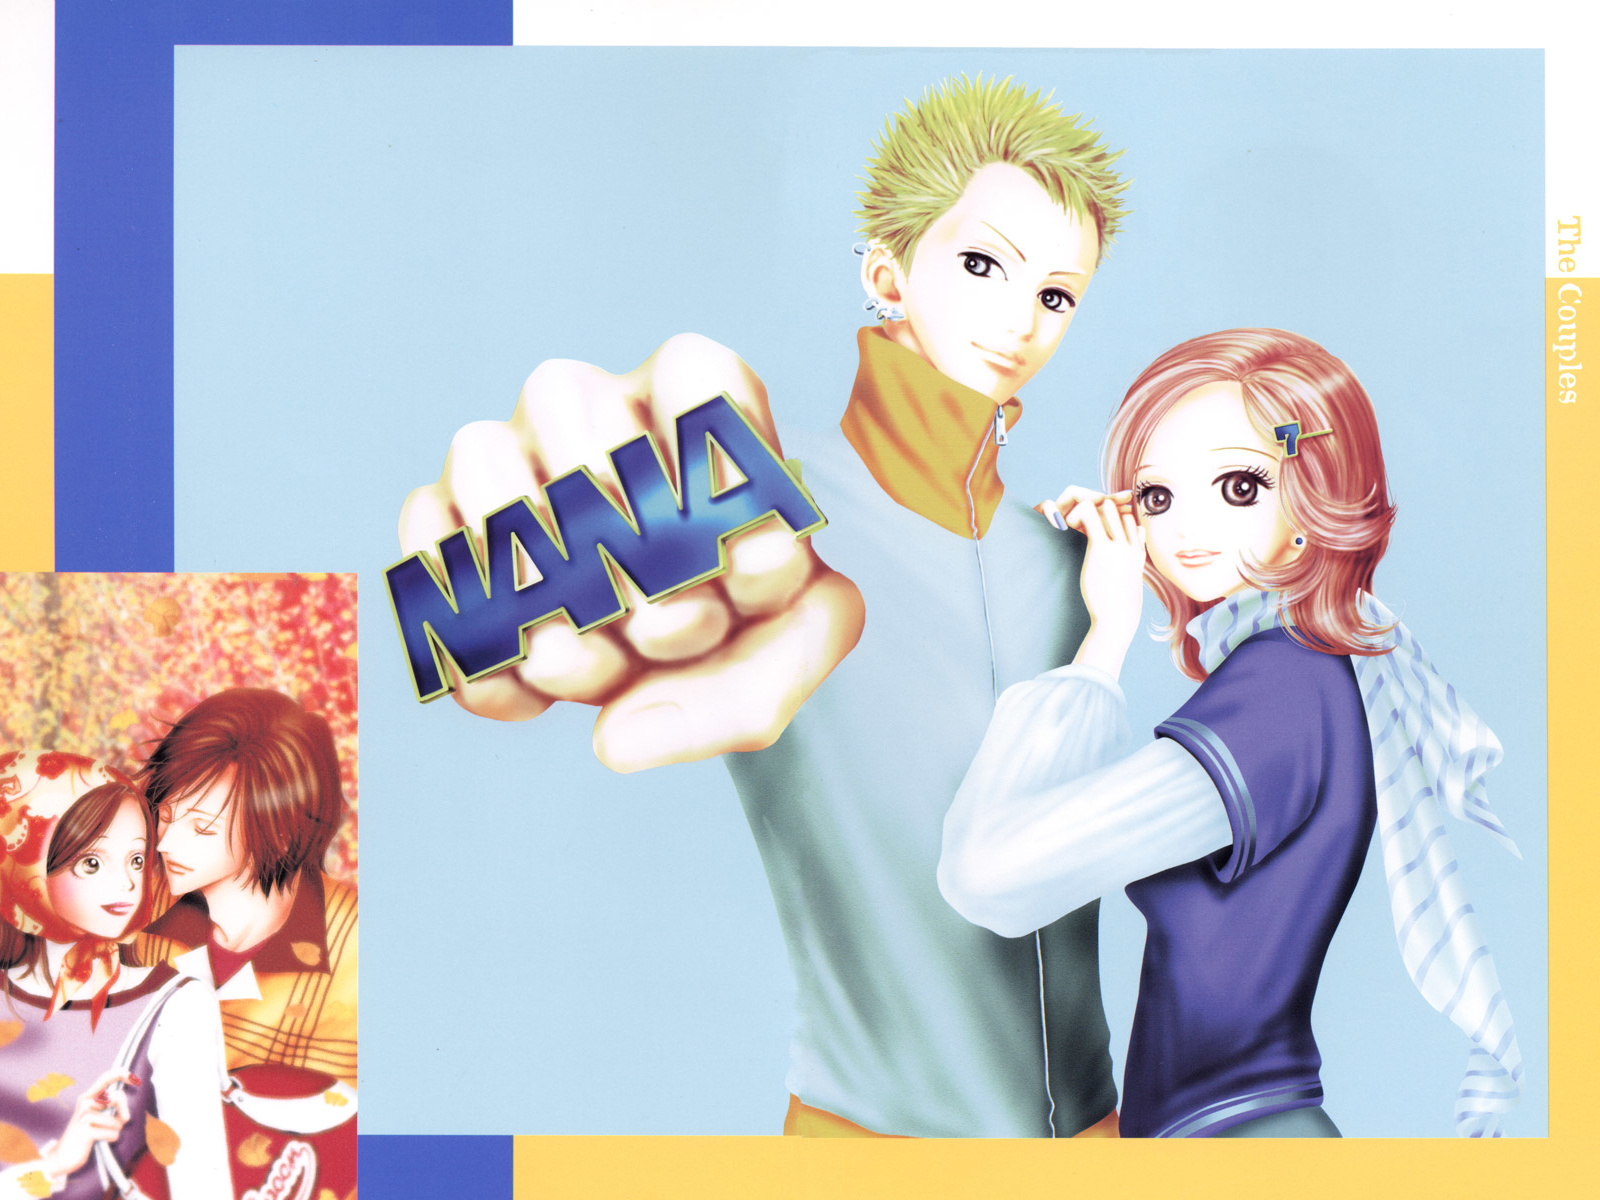 Nana - Anime Girls Wallpapers and Images - Desktop Nexus Groups